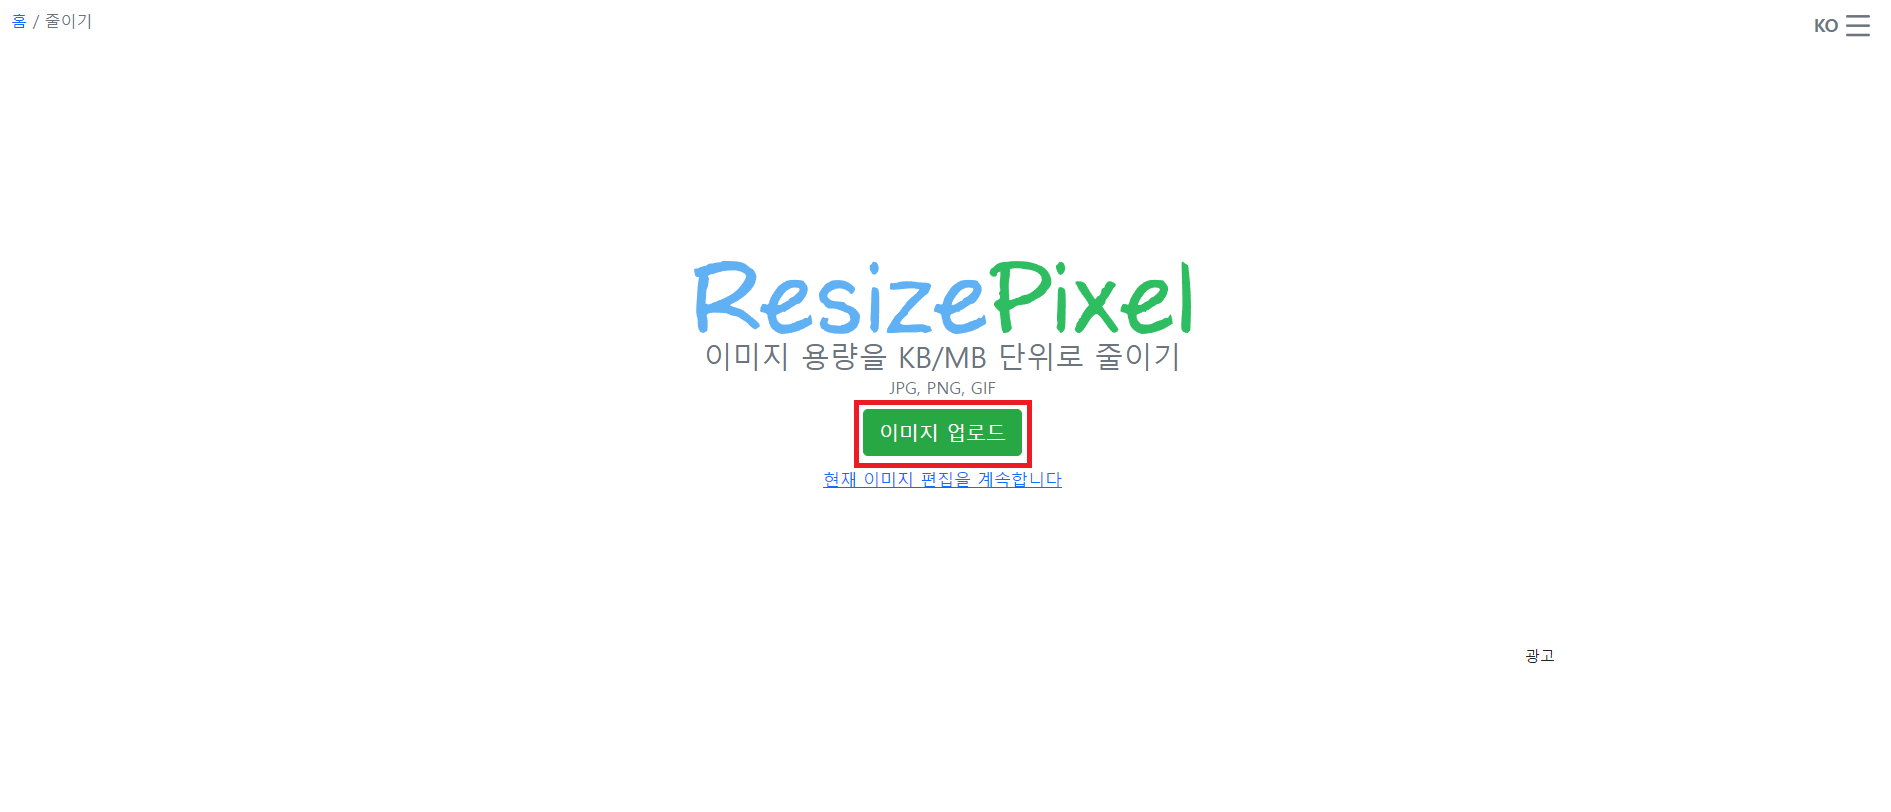 ResizePixel 사이트 사진